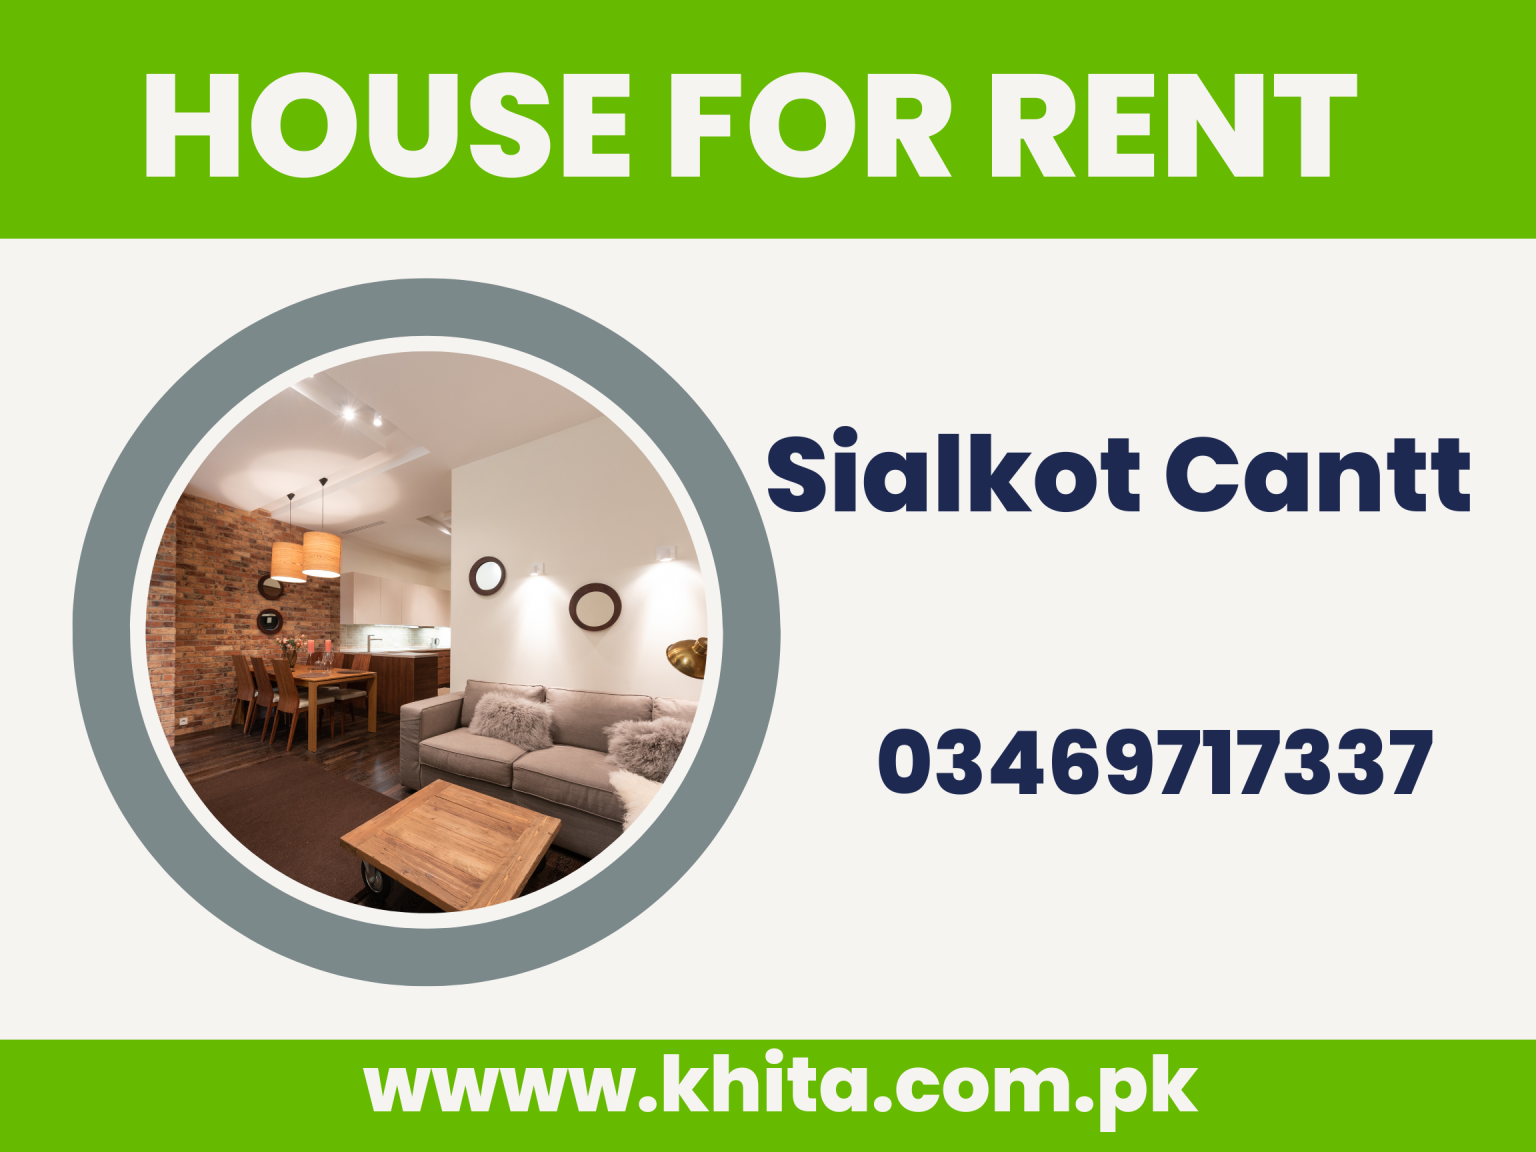 Rent House In Sialkot Cantt